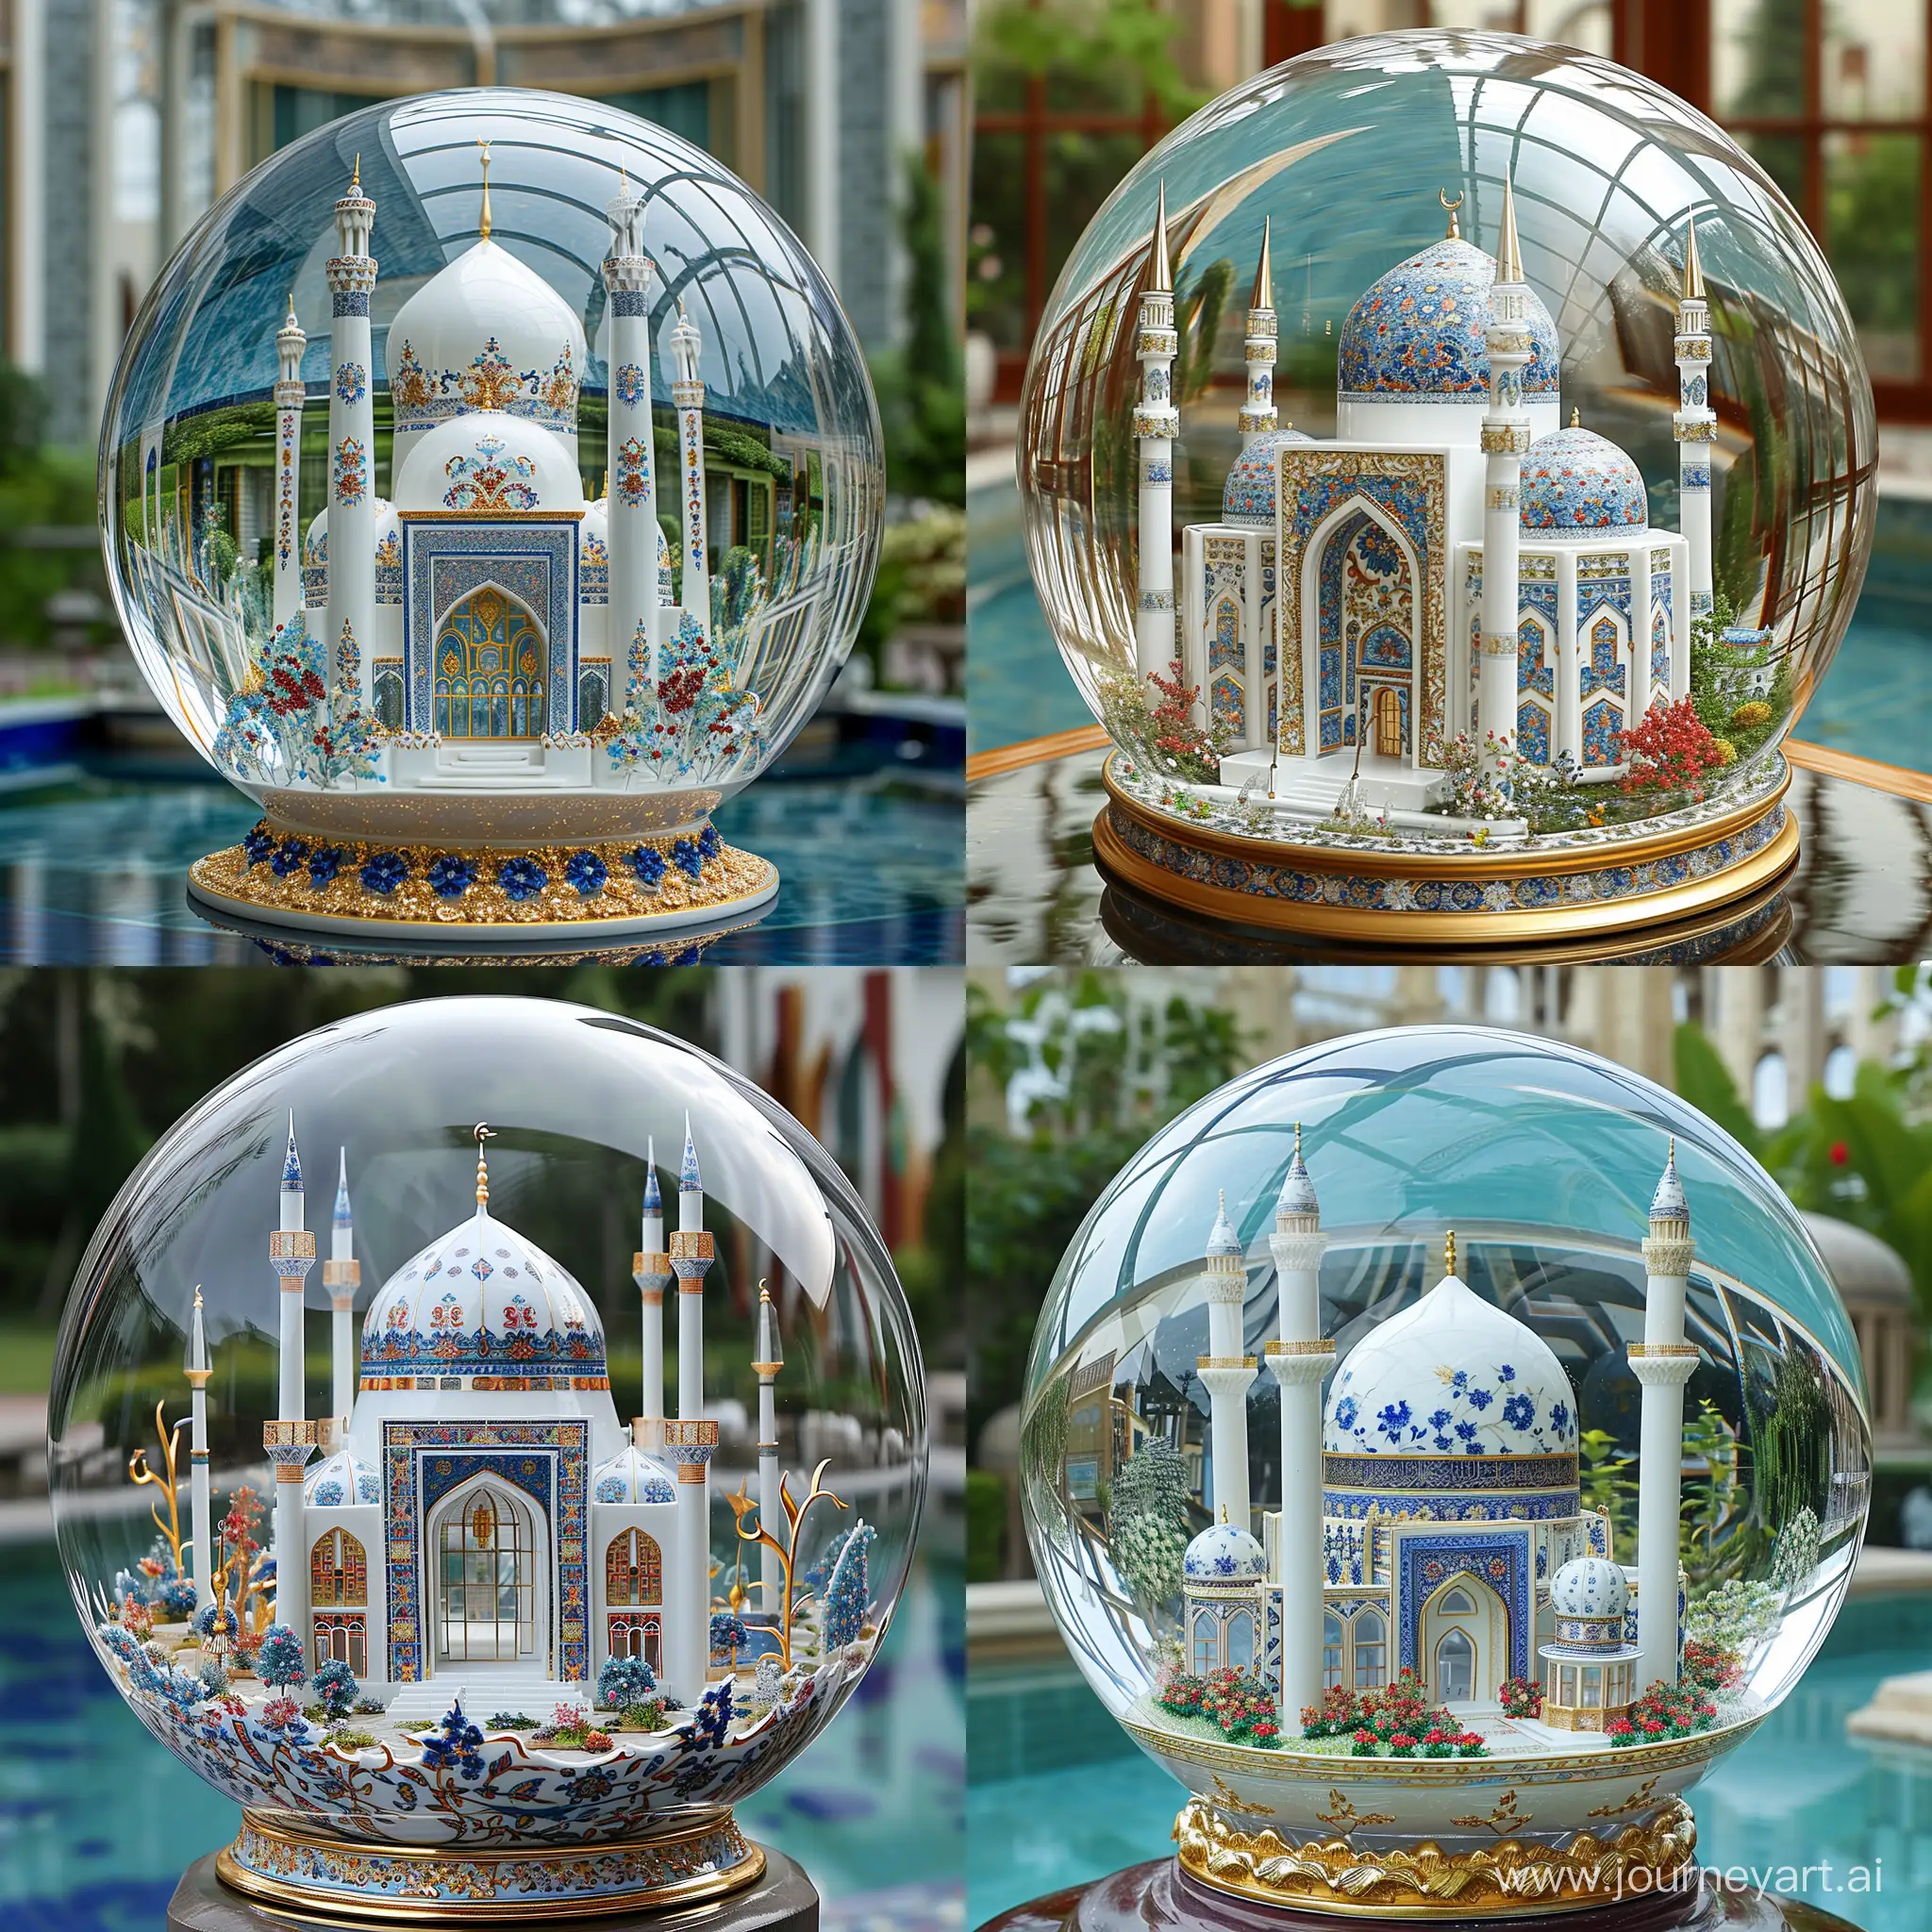 Exquisite-Uzbekistan-Mosque-in-Crystal-Ball-with-Iznik-Ceramic-Elegance